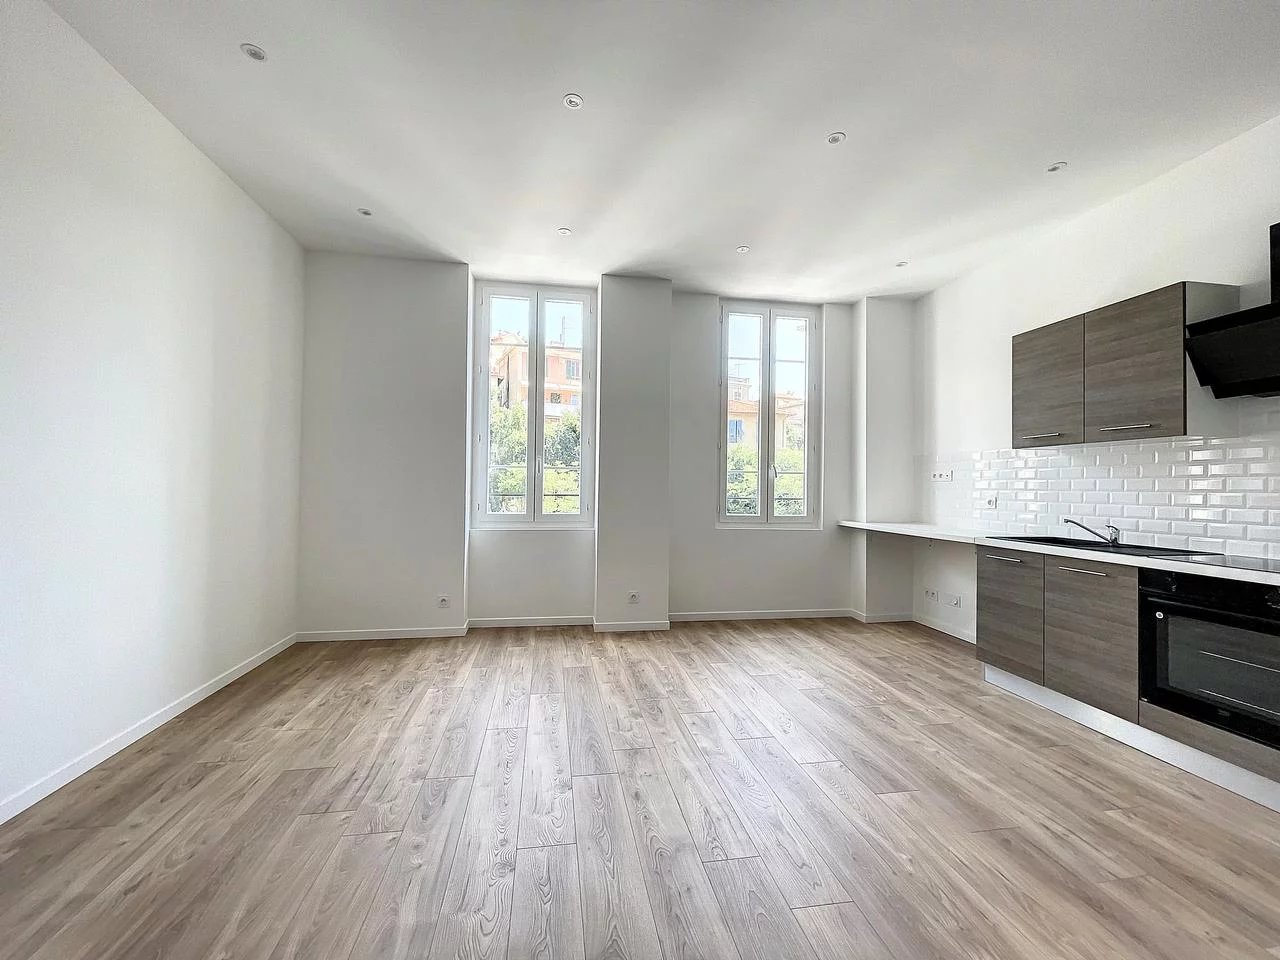 Appartement  2 Locali 40m2  In vendita   235 000 €